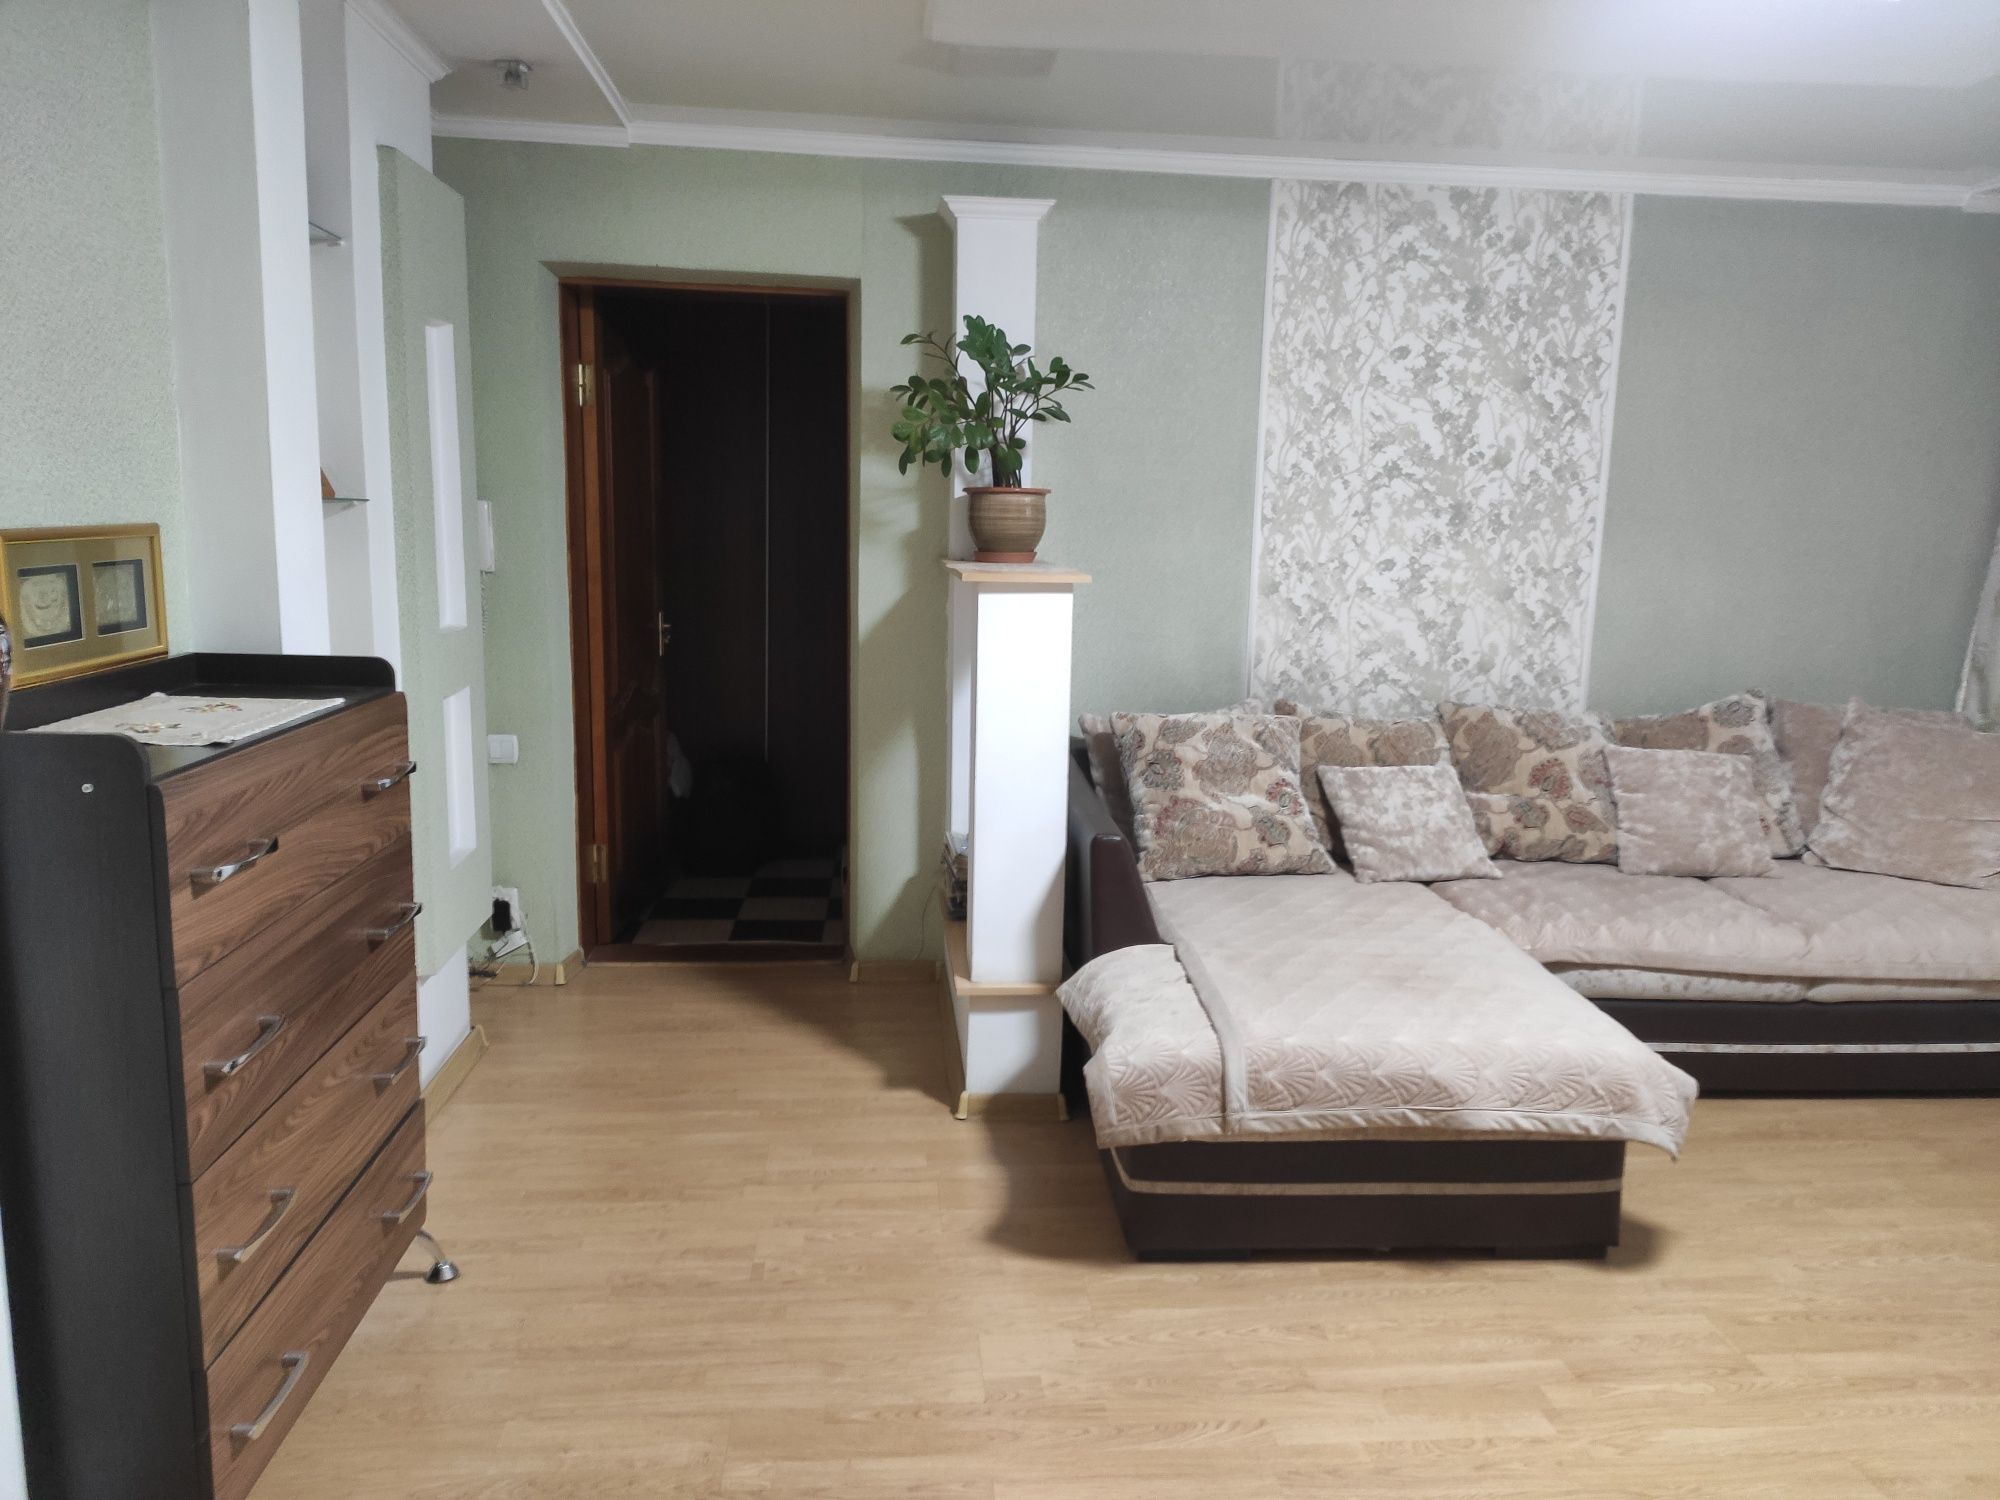 Продается 3-х комнатная квартира в кирпичном доме по пр. Шакарима 42